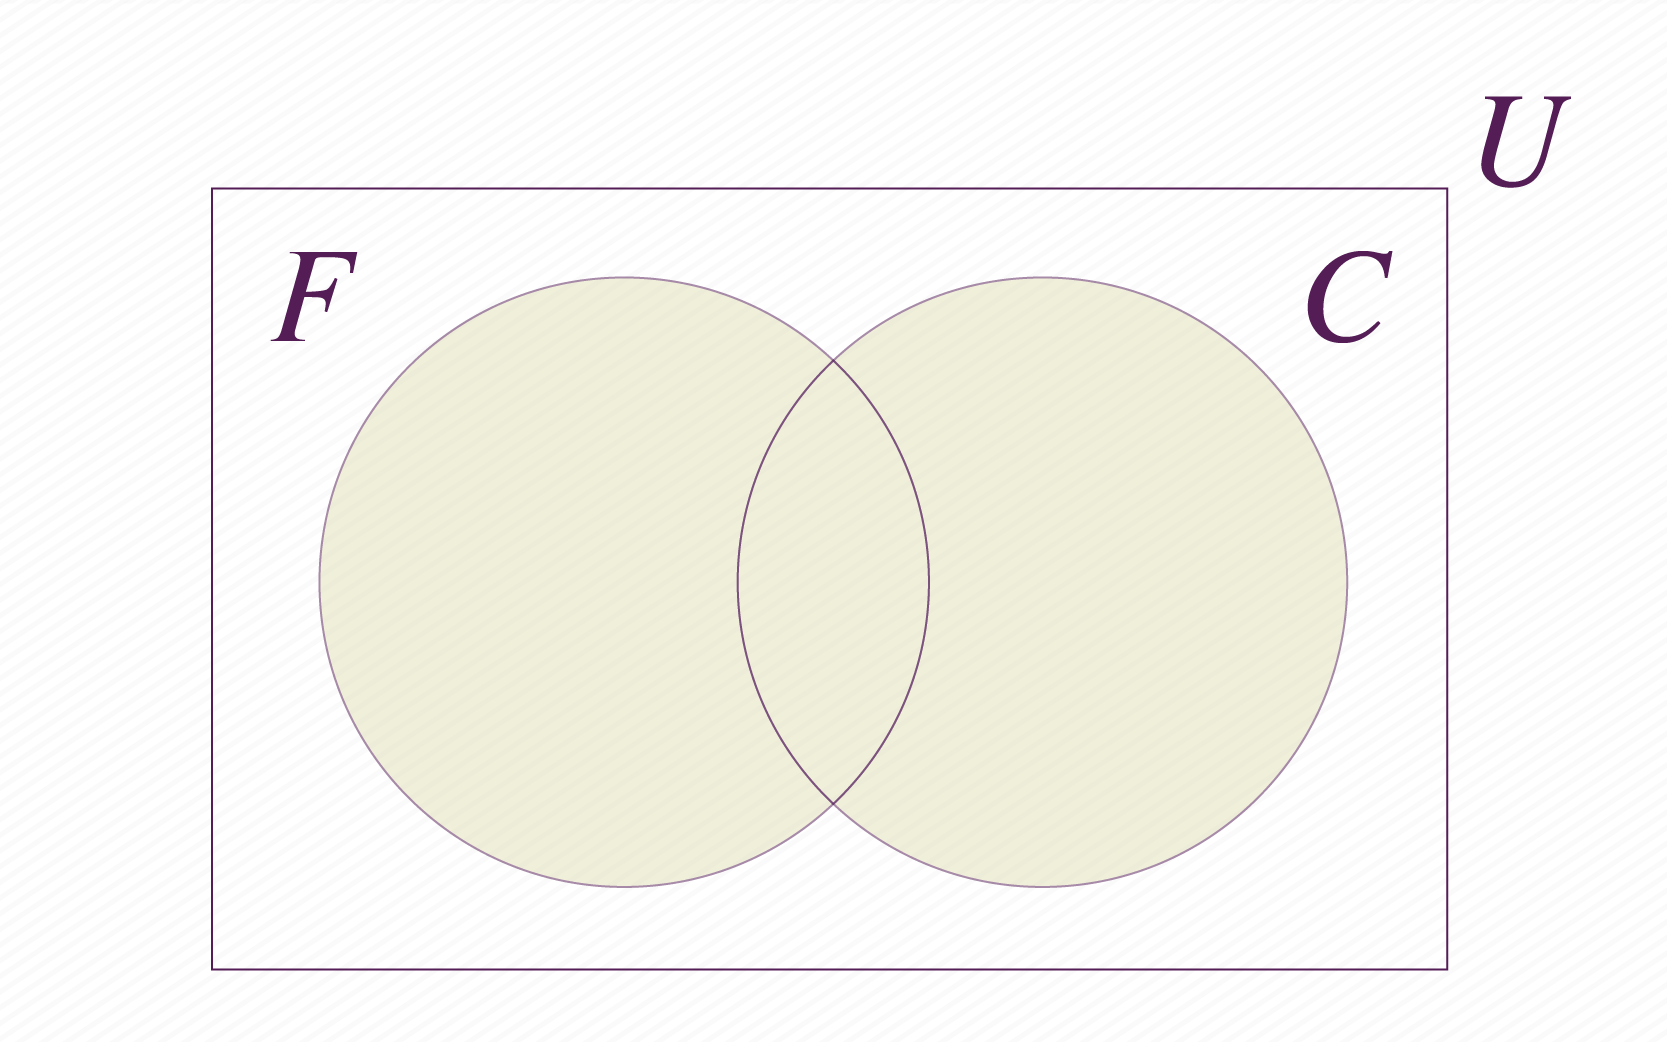 Representamos las situación por medio de diagramas de Venn.